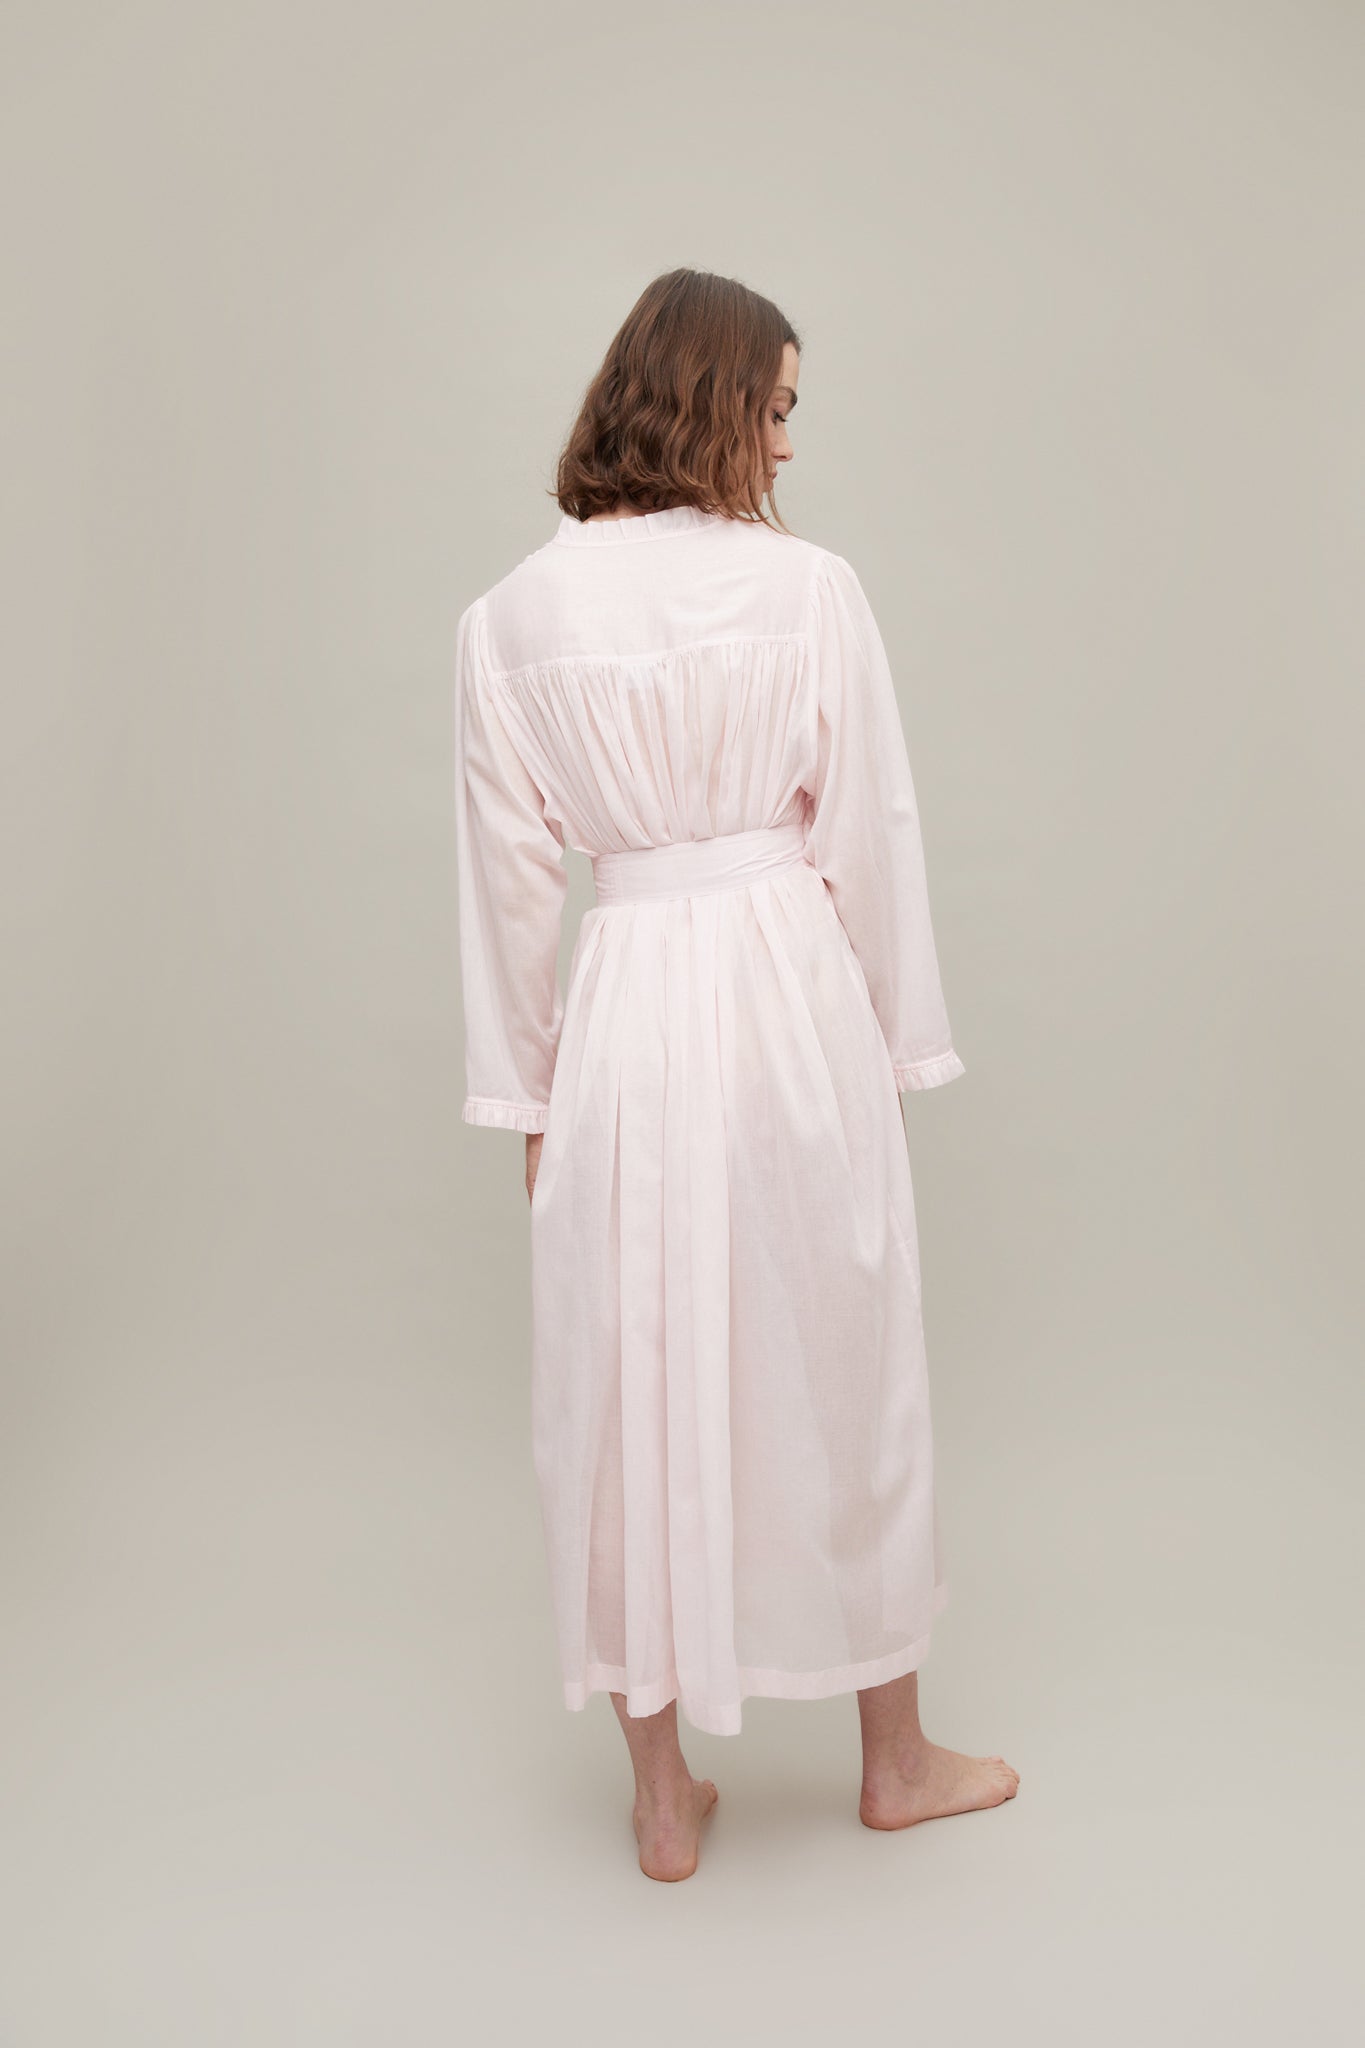 Celeste Négligée Long Robe in Rosé